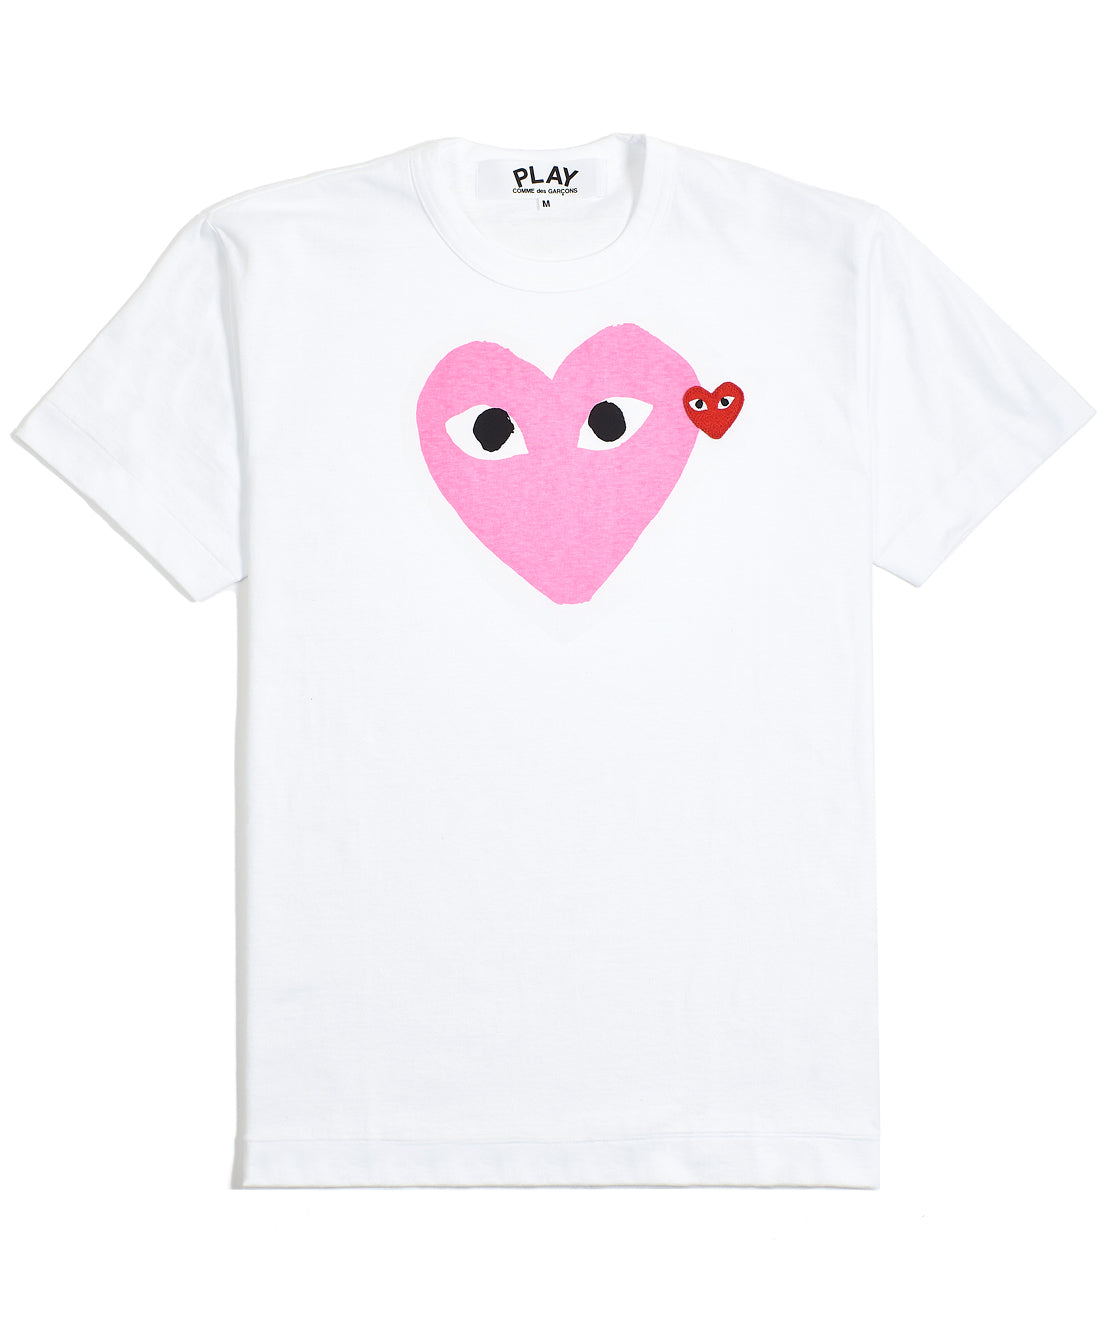 CDG Play - Pink heart T-Shirt - White